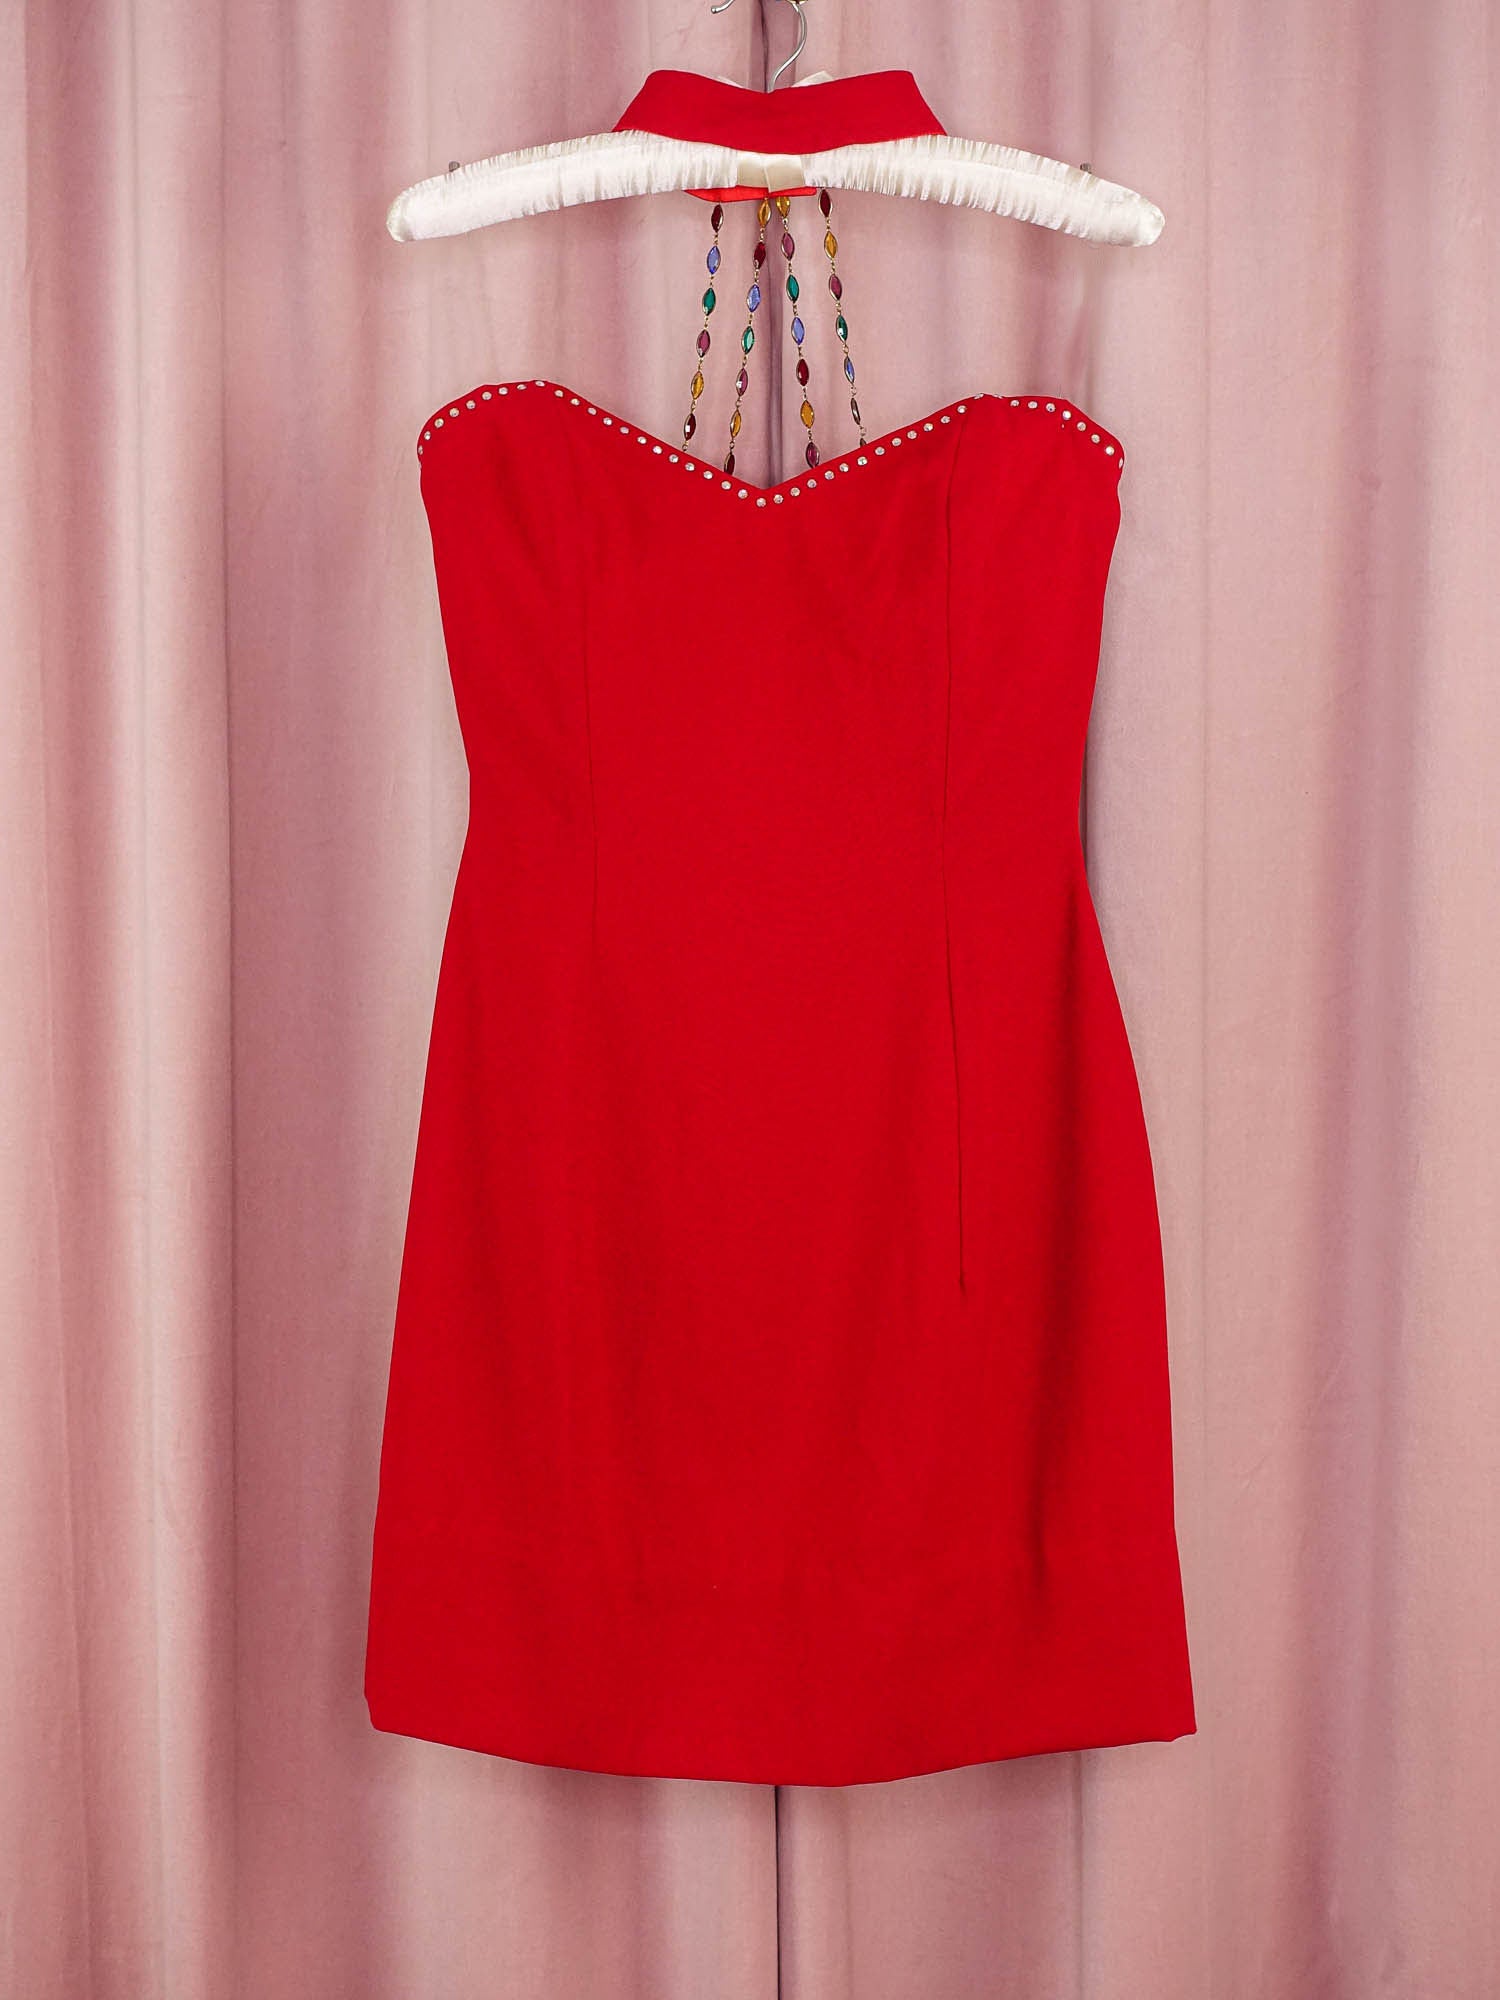 1990s Red Collar Mini Dress with Rainbow Glass Beads